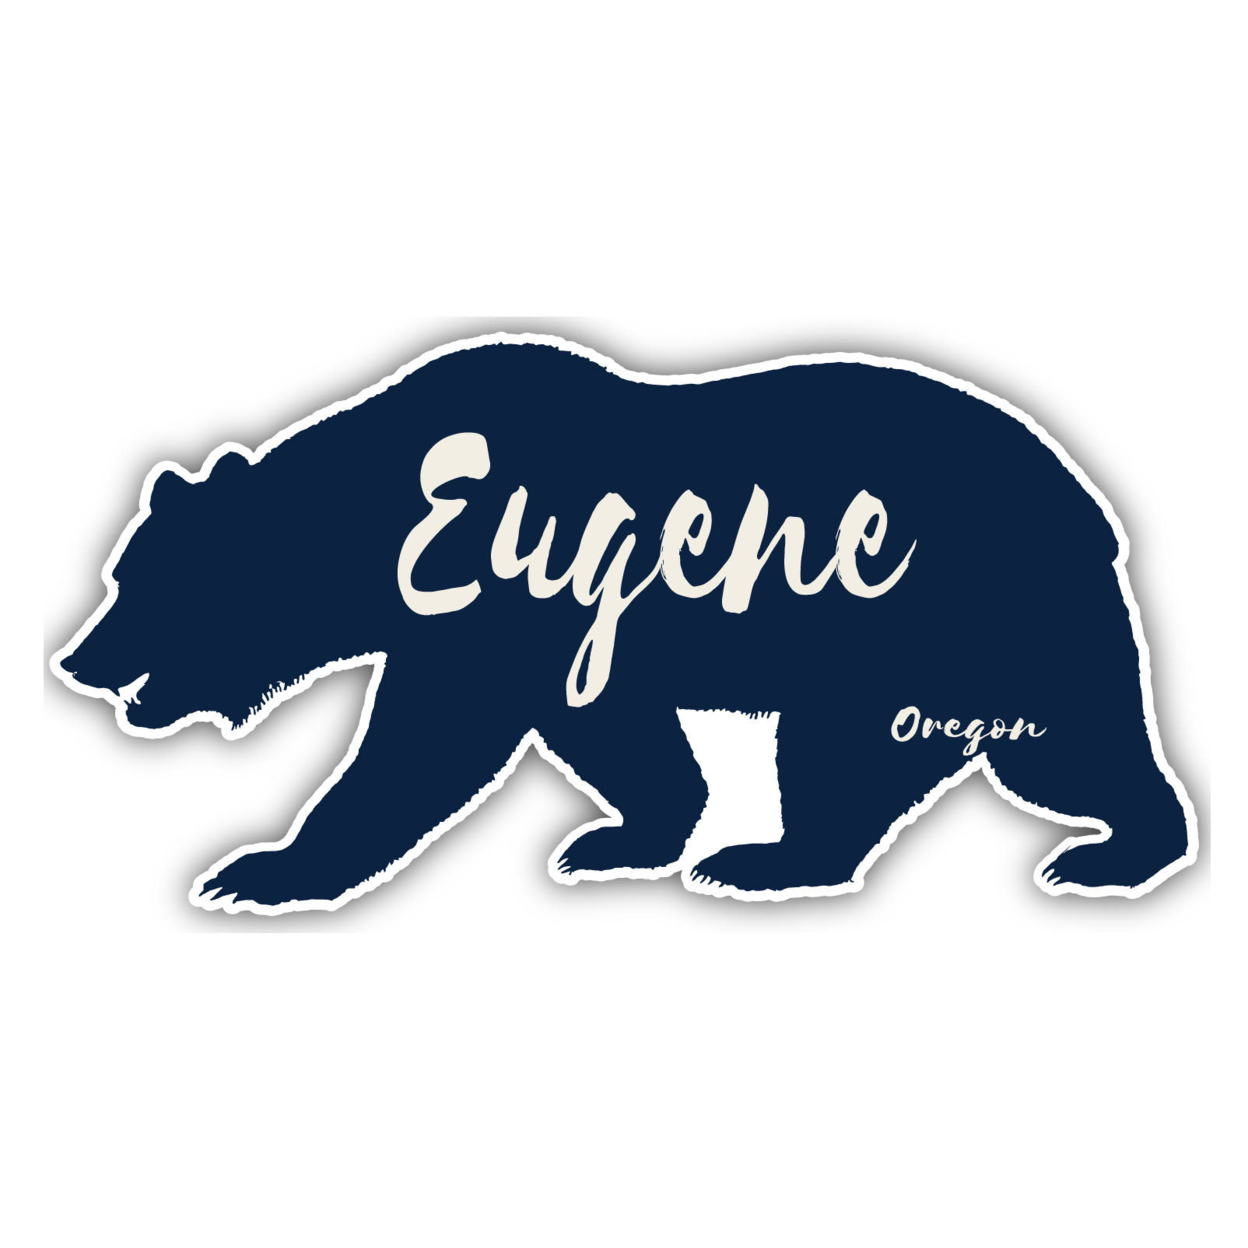 Eugene Oregon Souvenir Decorative Stickers (Choose Theme And Size) - Single Unit, 4-Inch, Bear